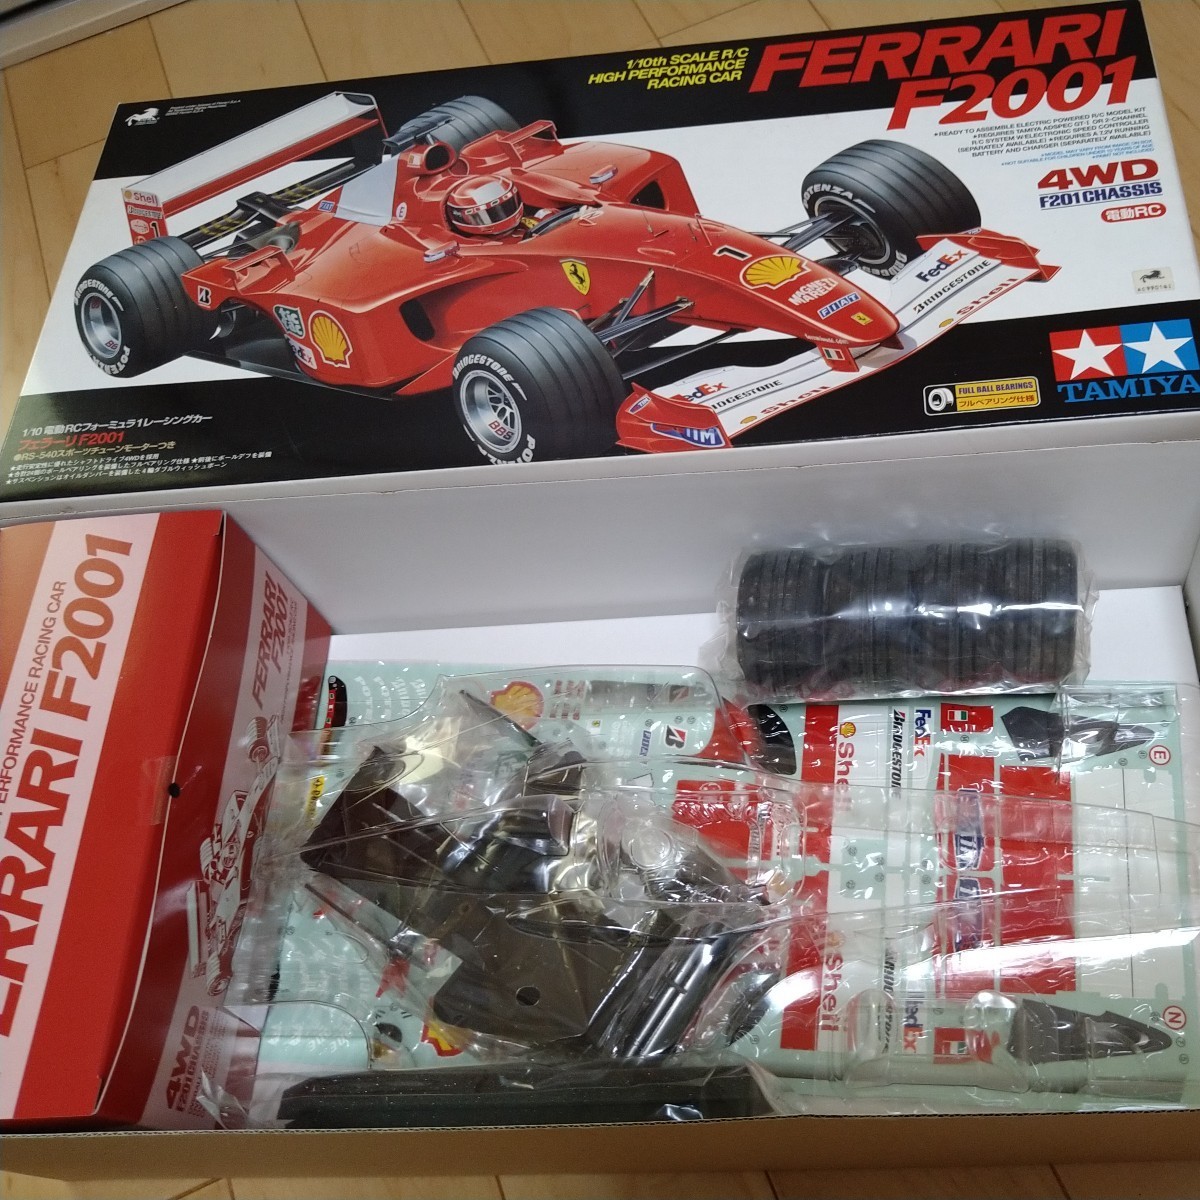 Ferrari F2001 フェラーリ タミヤ TAMIYA 1/10 田宮 未組立 4WD レア